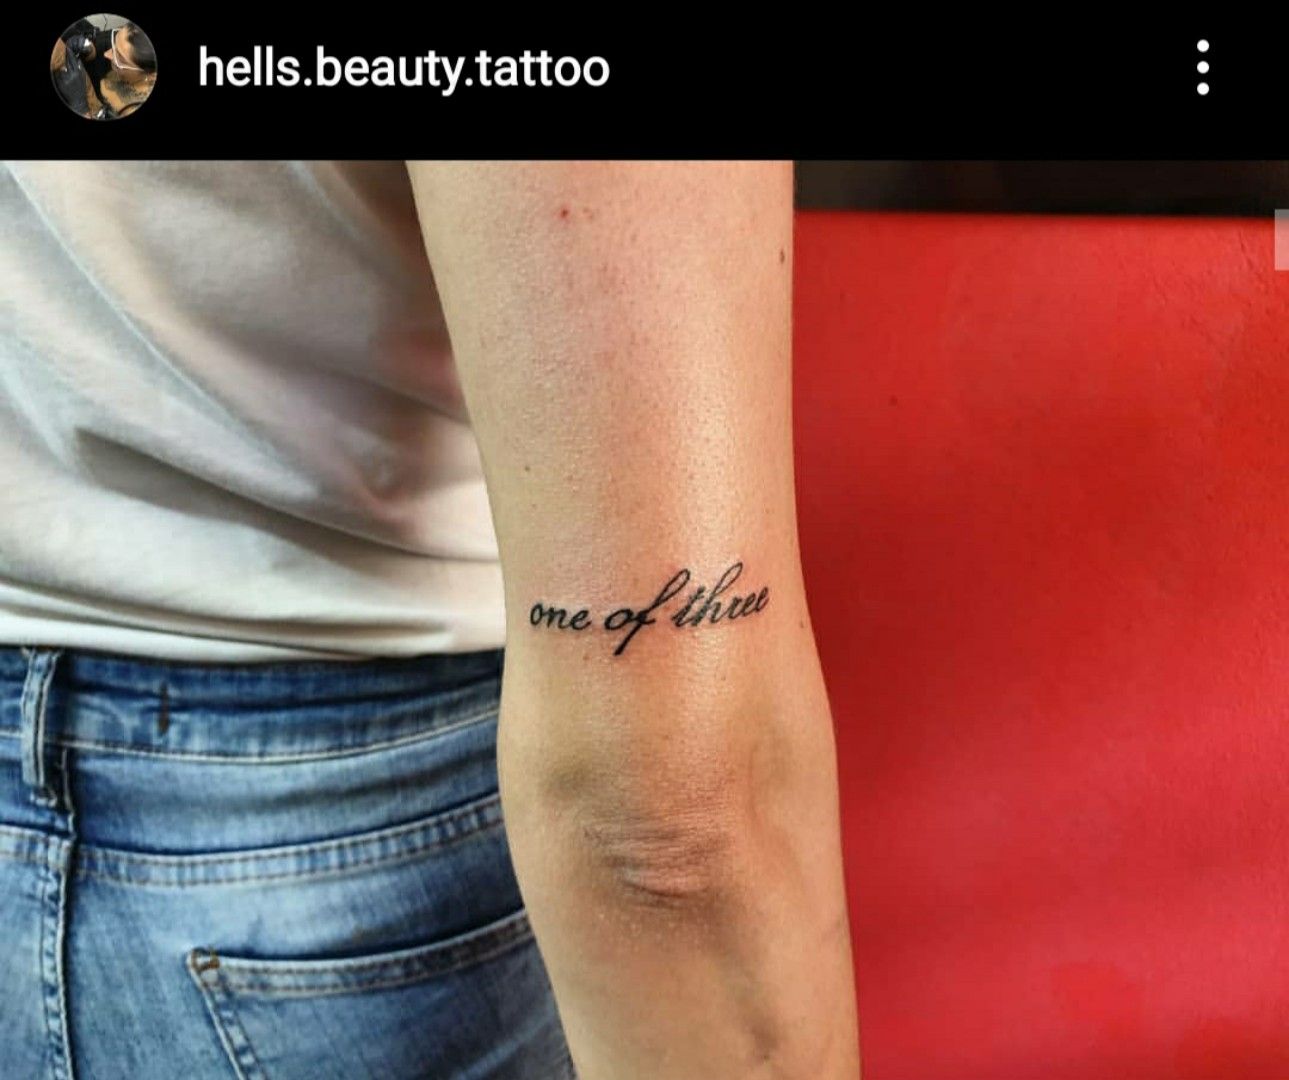 belle ame tattooTikTok Search